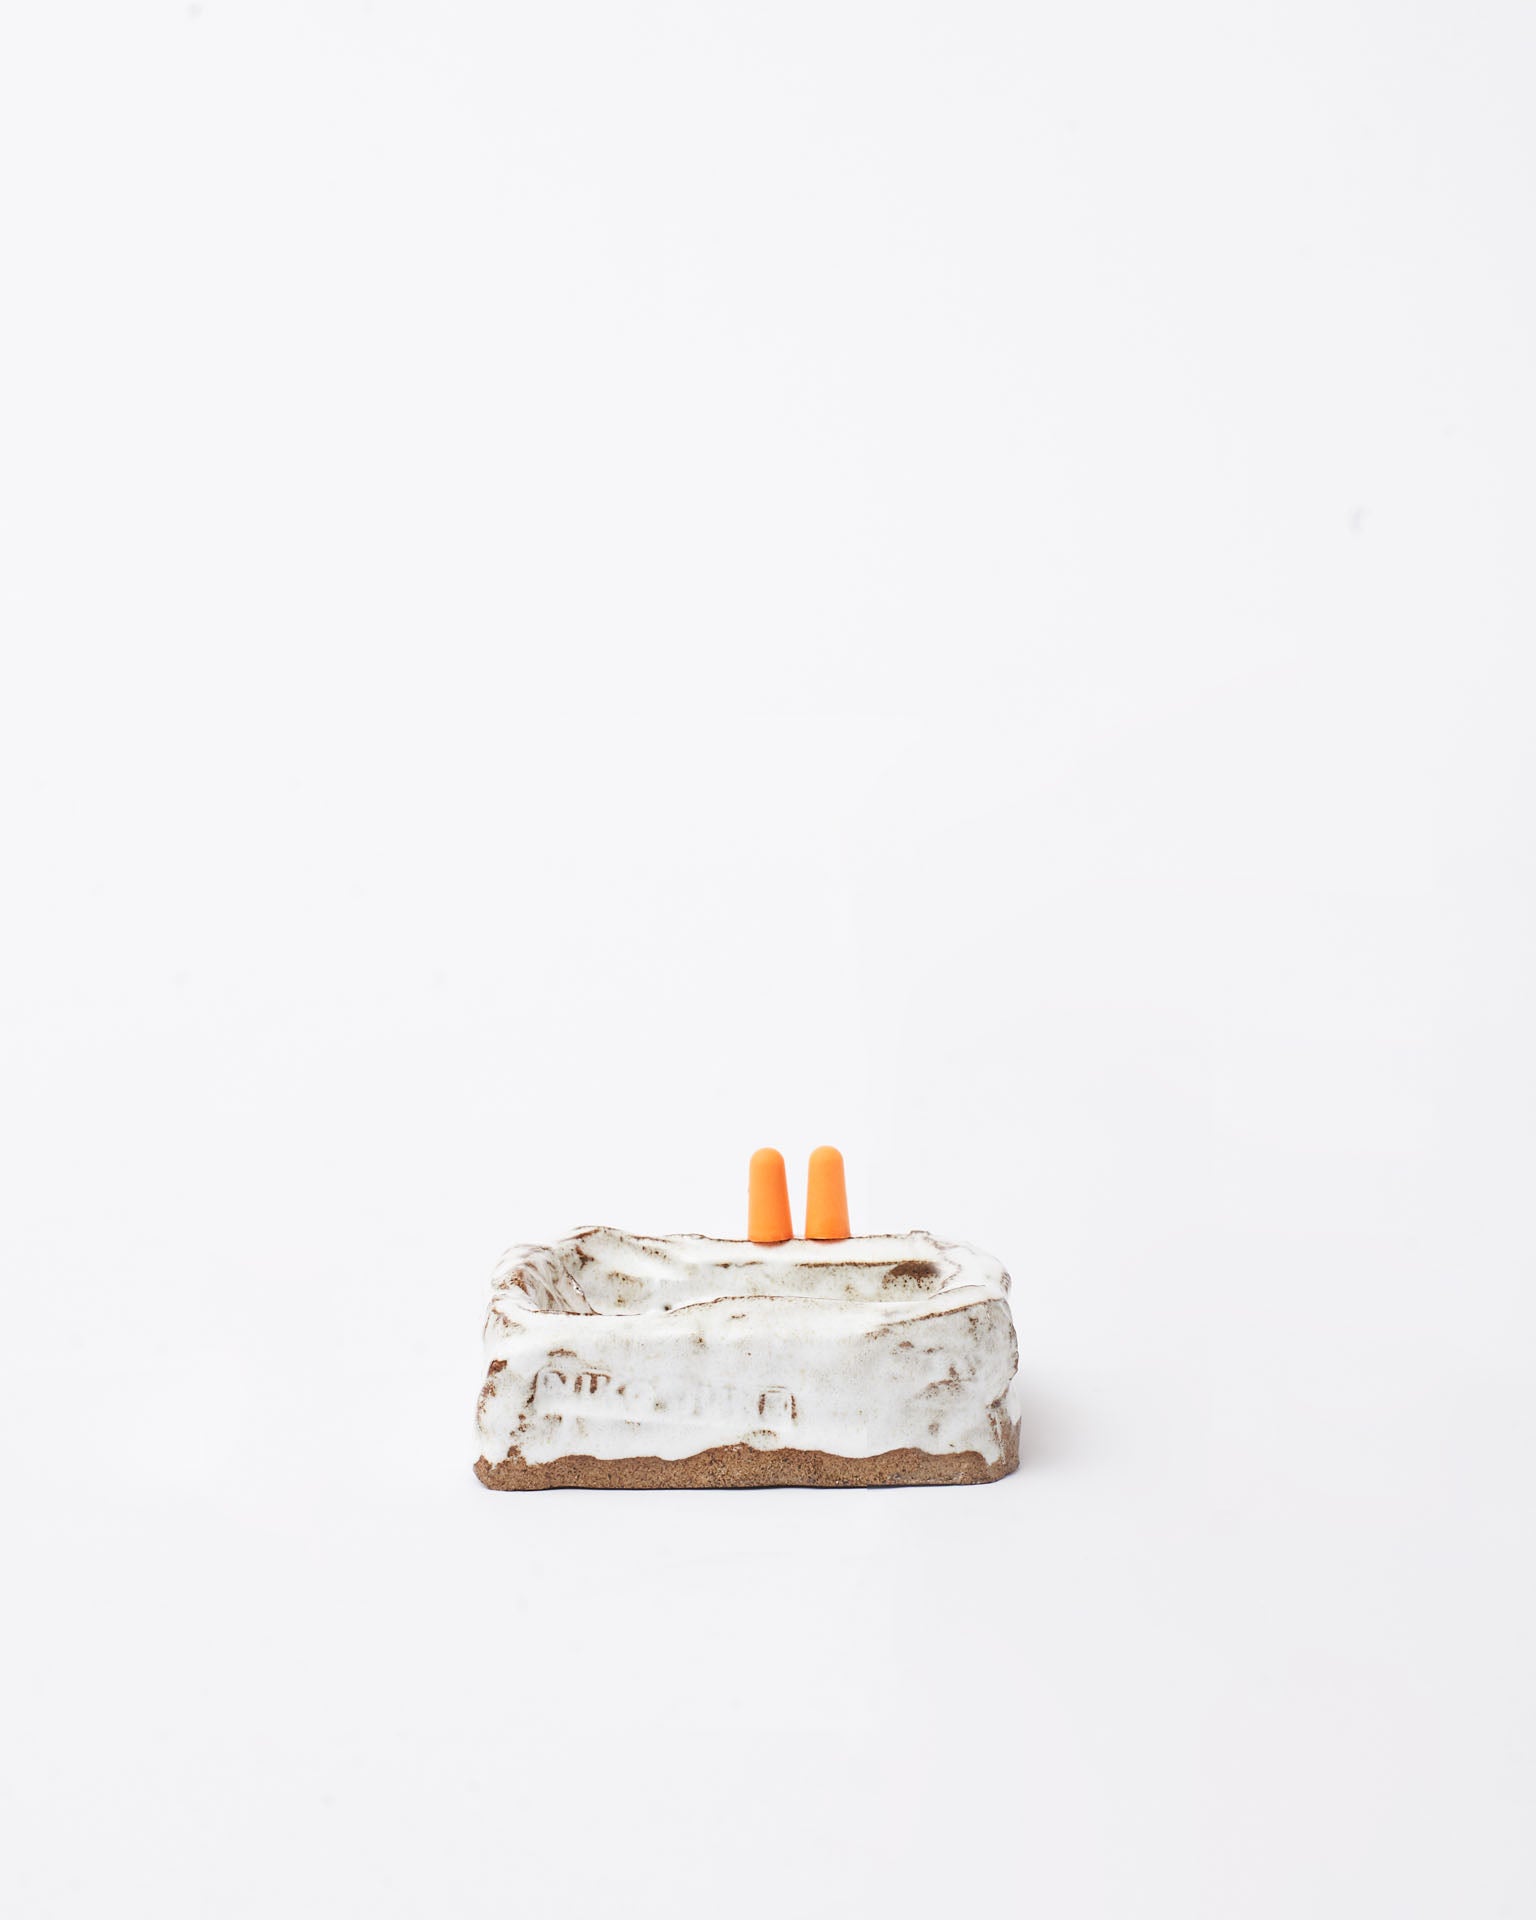 Handmade ceramic organizer object white with two earplug in white background